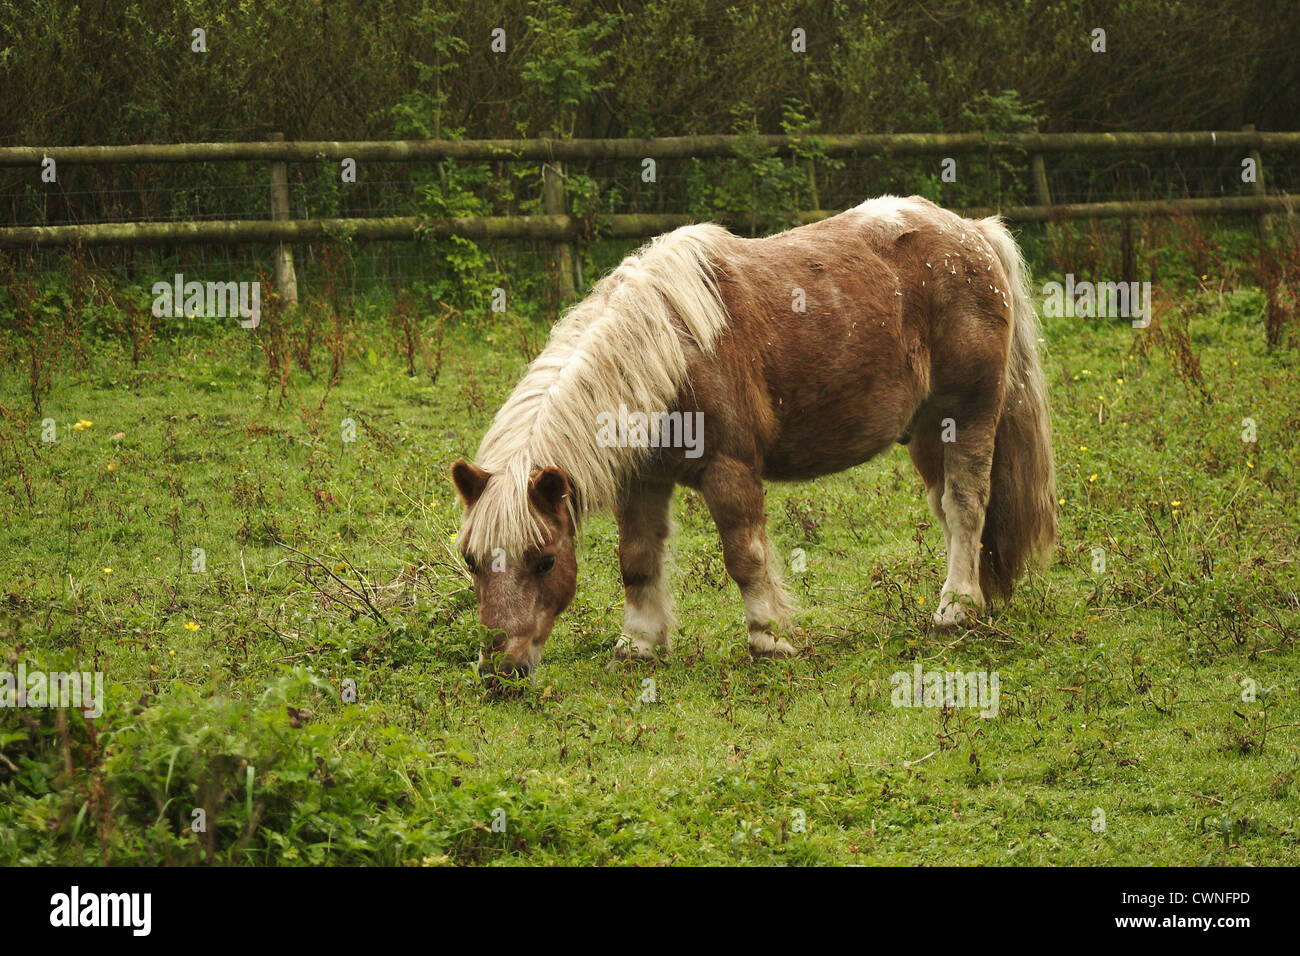 Small scruffy horse Stock Photo